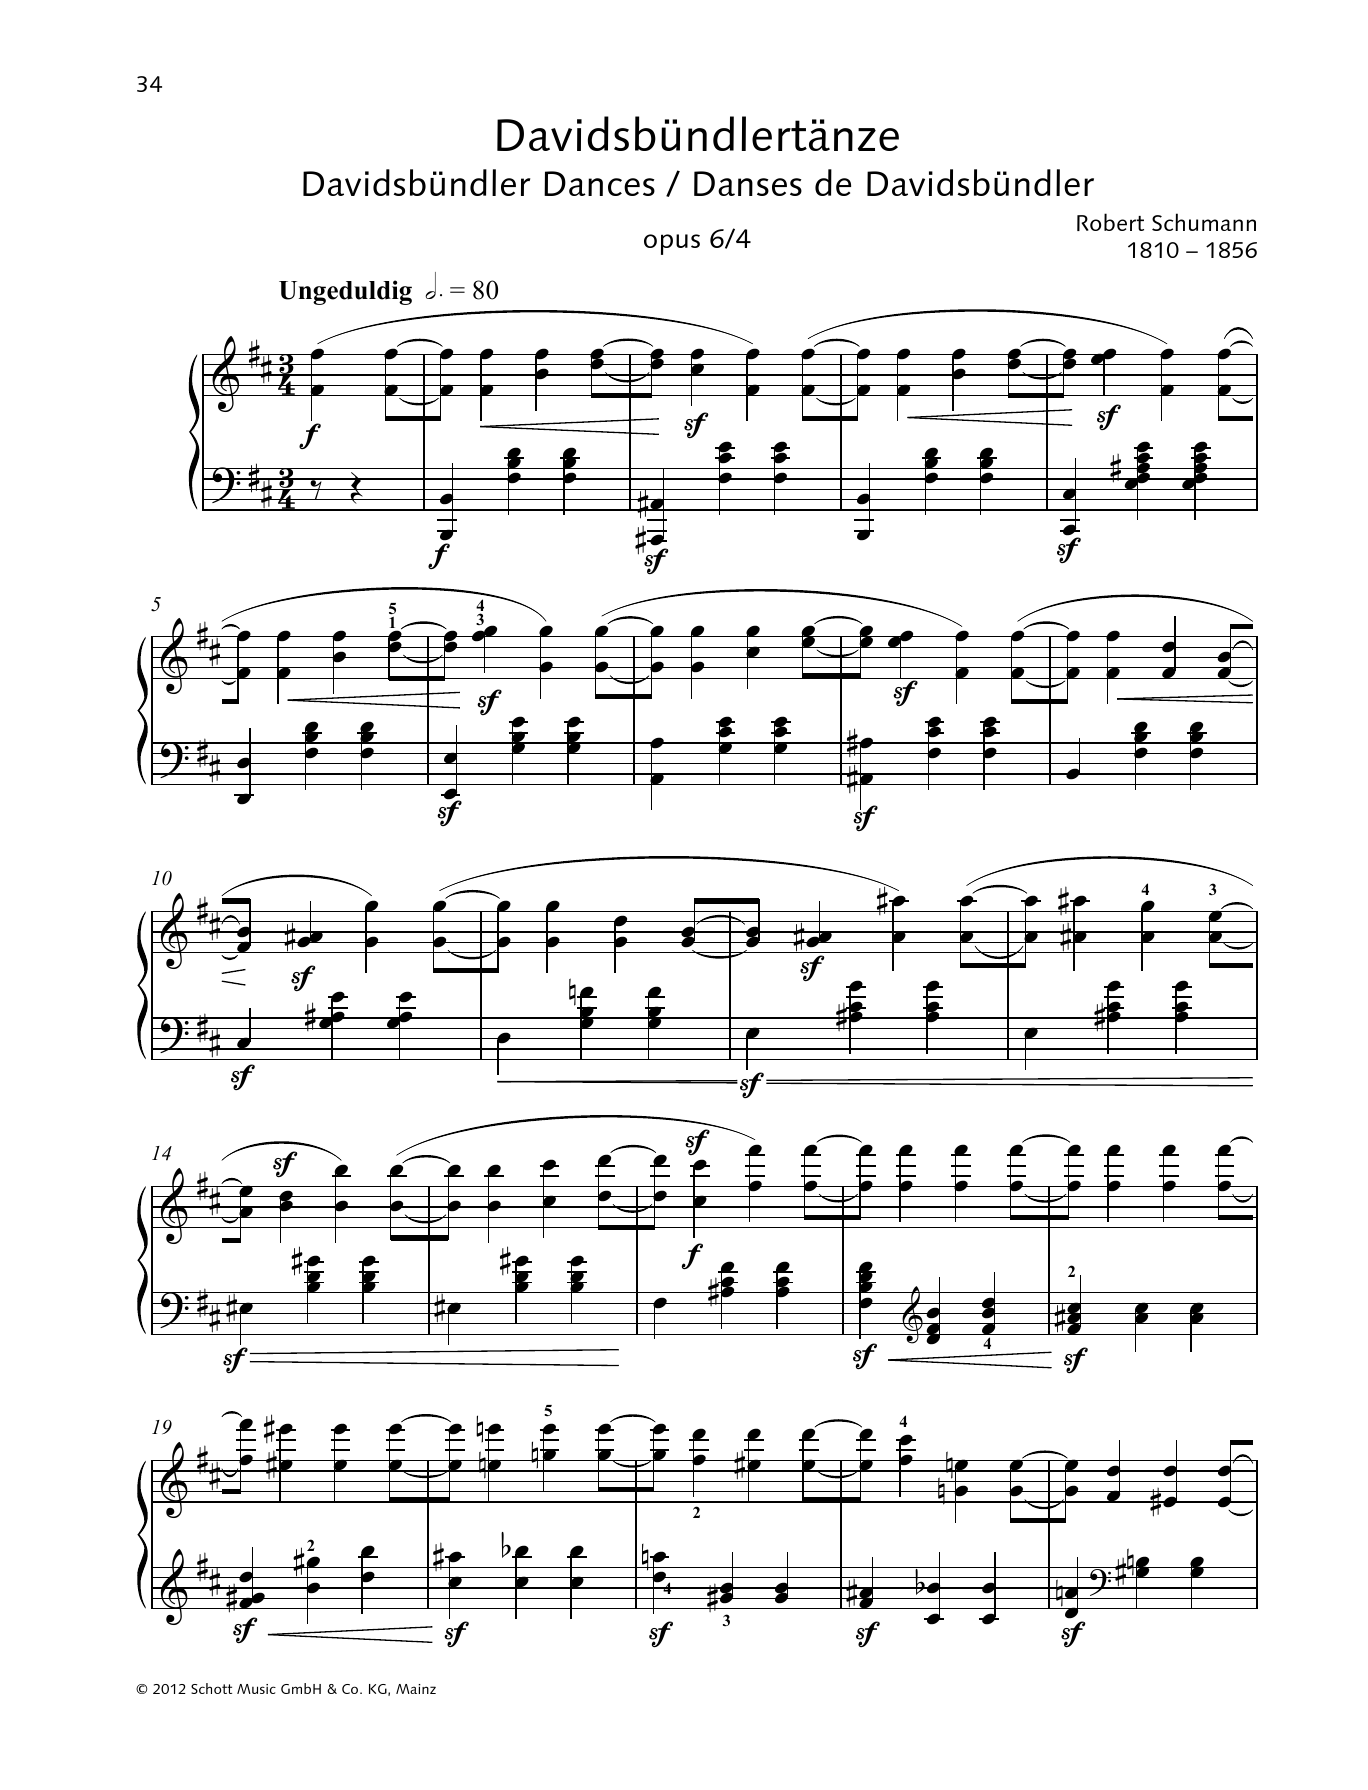 Robert Schumann Davidsbündler Dances Sheet Music Notes & Chords for Piano Solo - Download or Print PDF